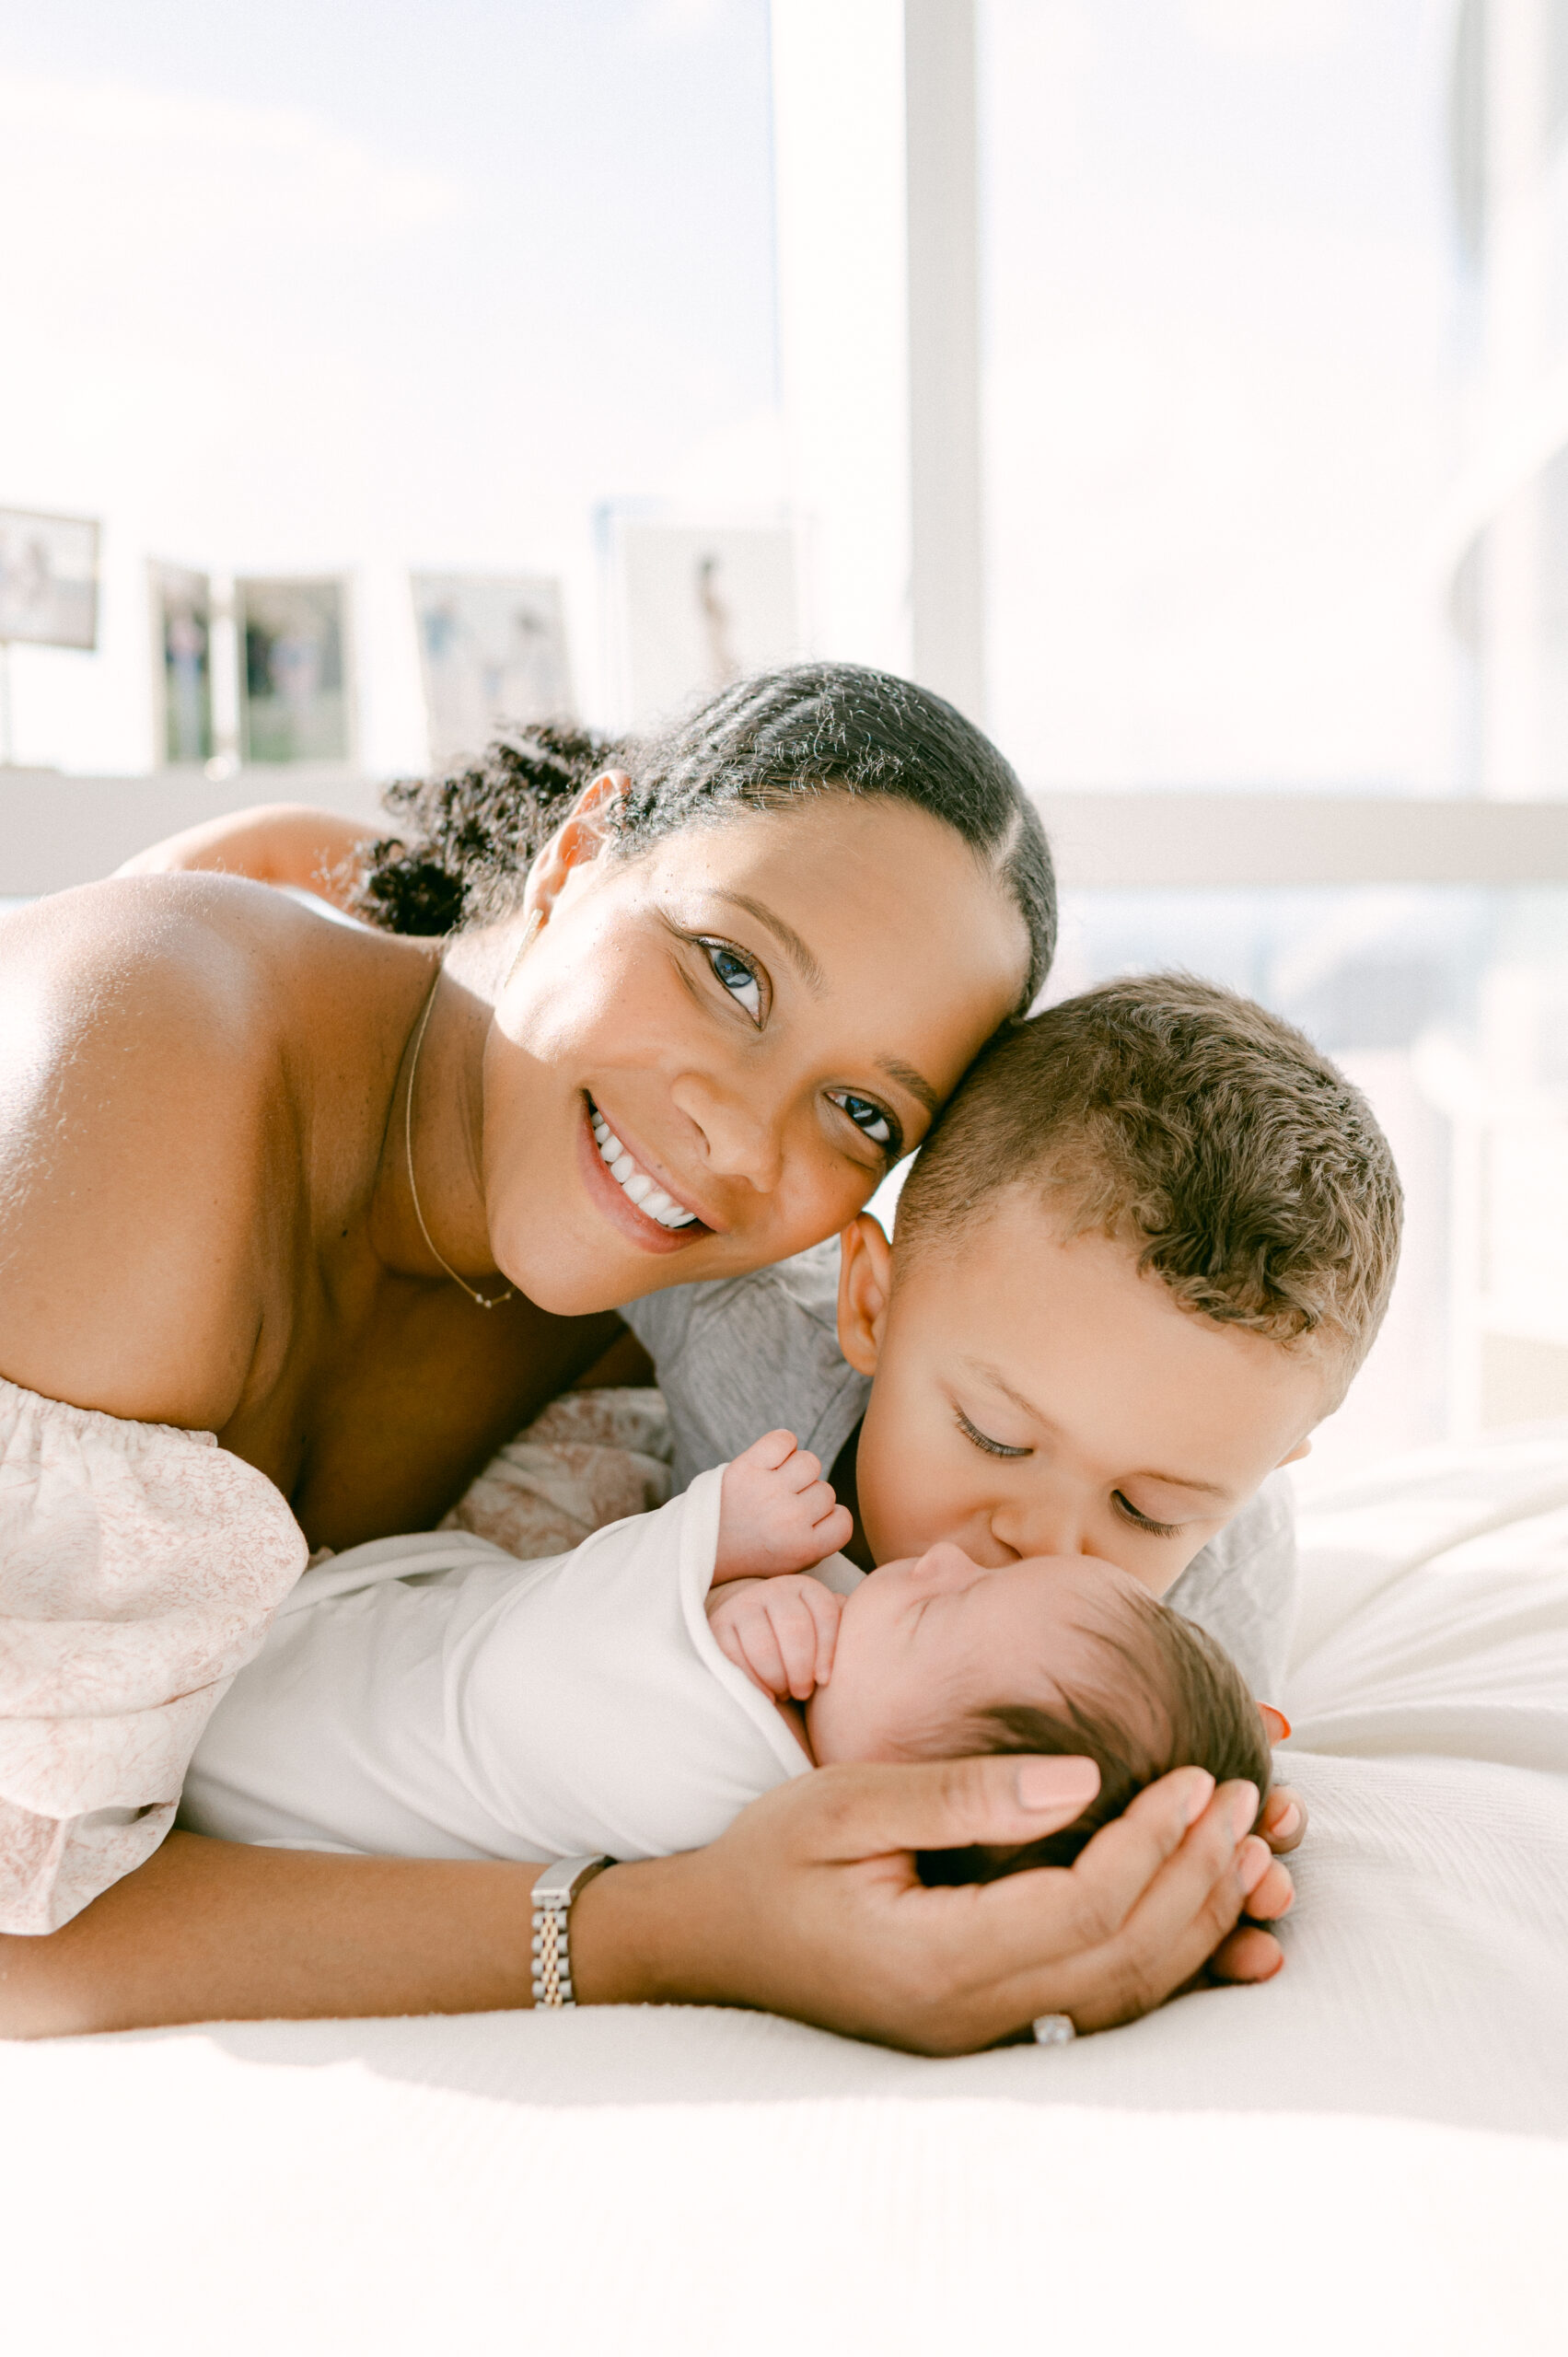 Miami's Newborn Photoshoot Checklist for Happy Parents